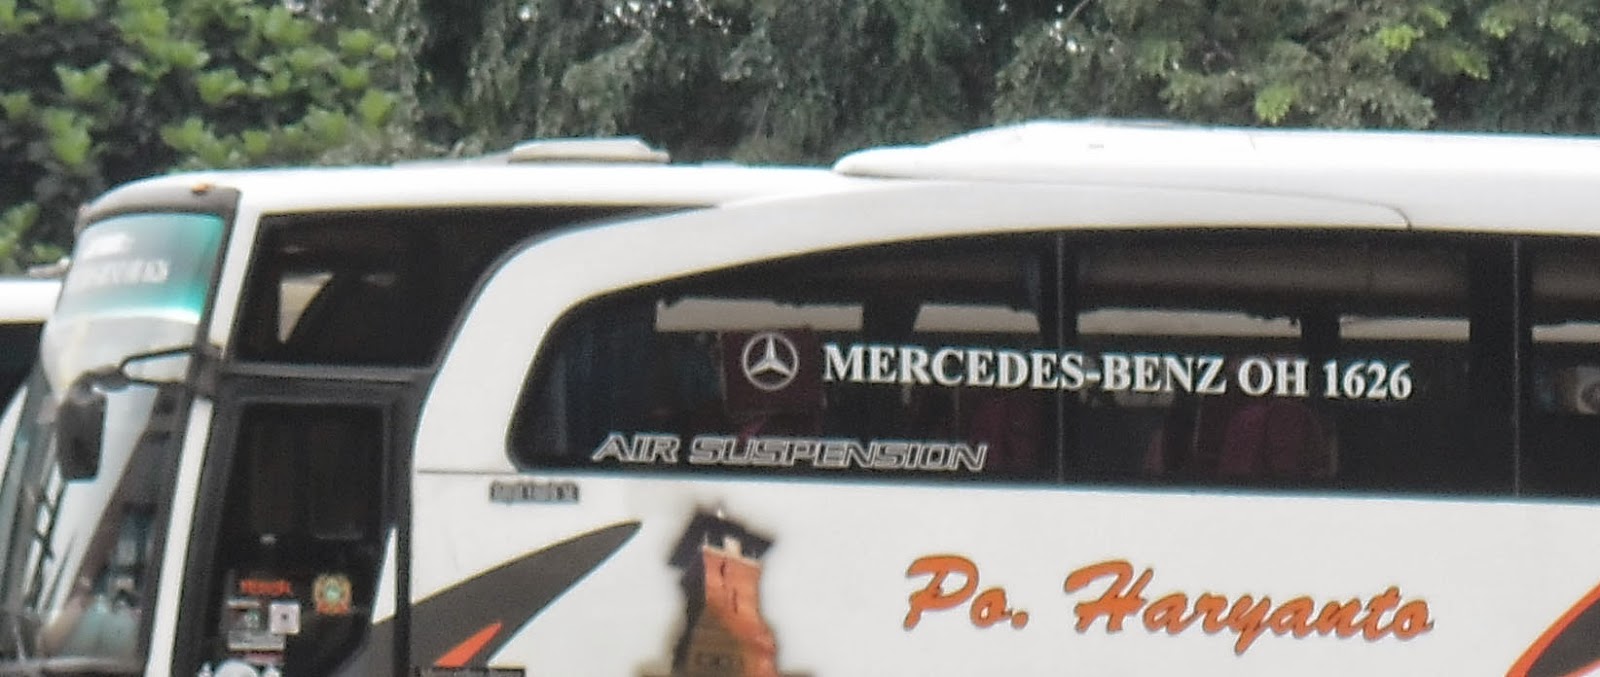 Mengenal Kode Chassis Mercedes-Benz Busses | Afatbenz Media